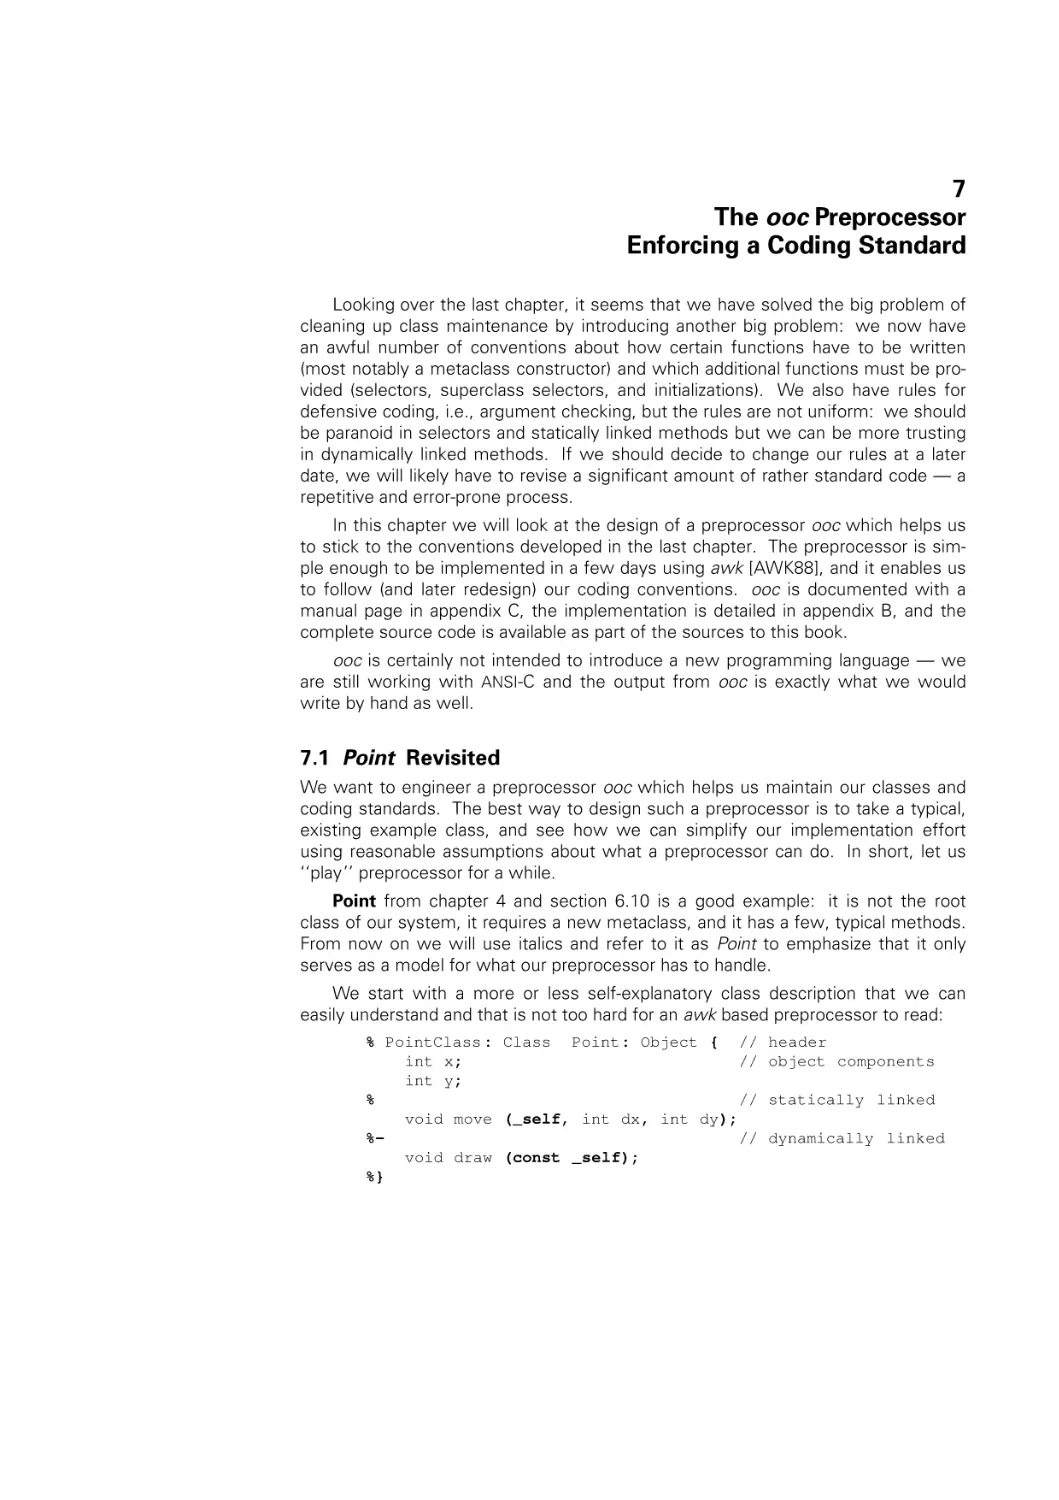 Preprocessor Enforcing a Coding Standard
Point revisited